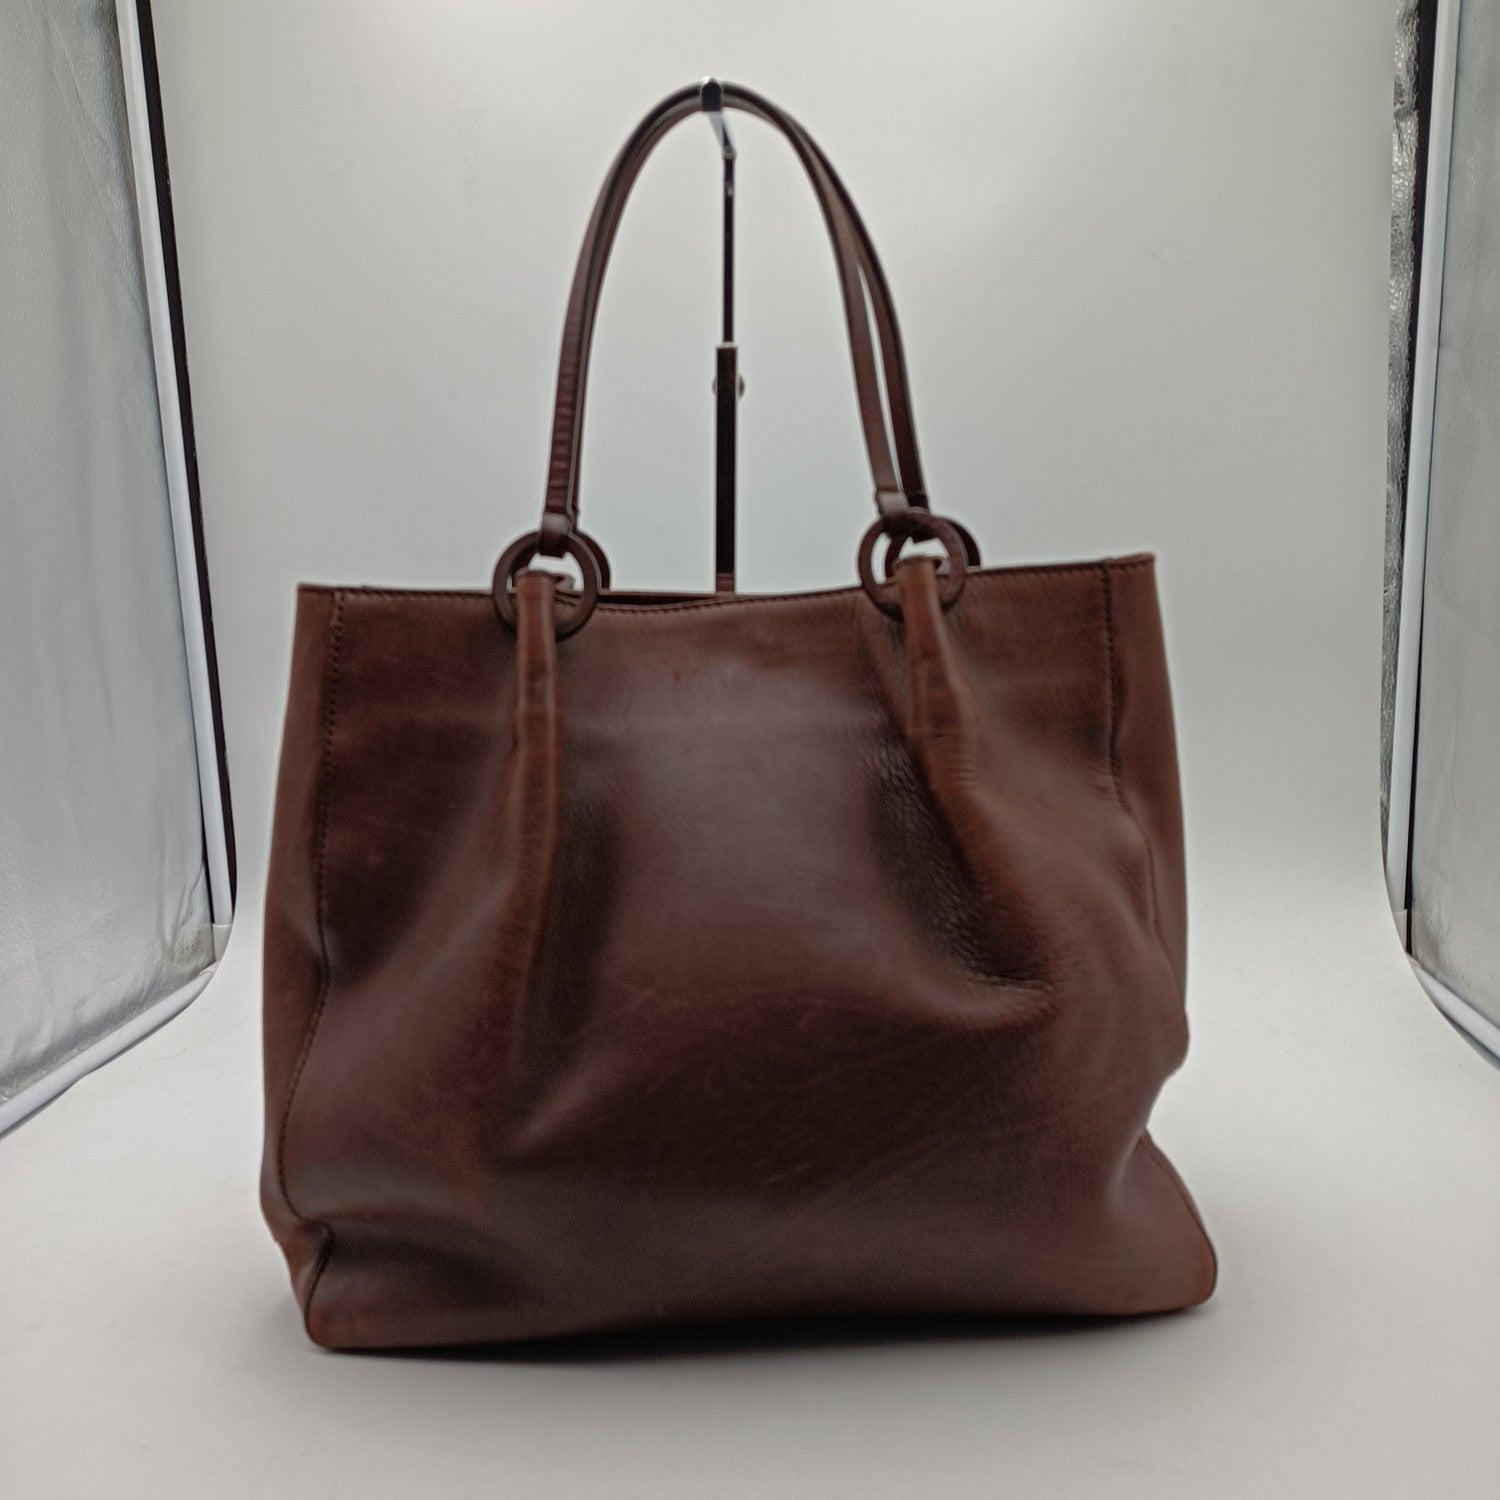 Black Gucci Brown Leather Tote Shopping Bag Handbag